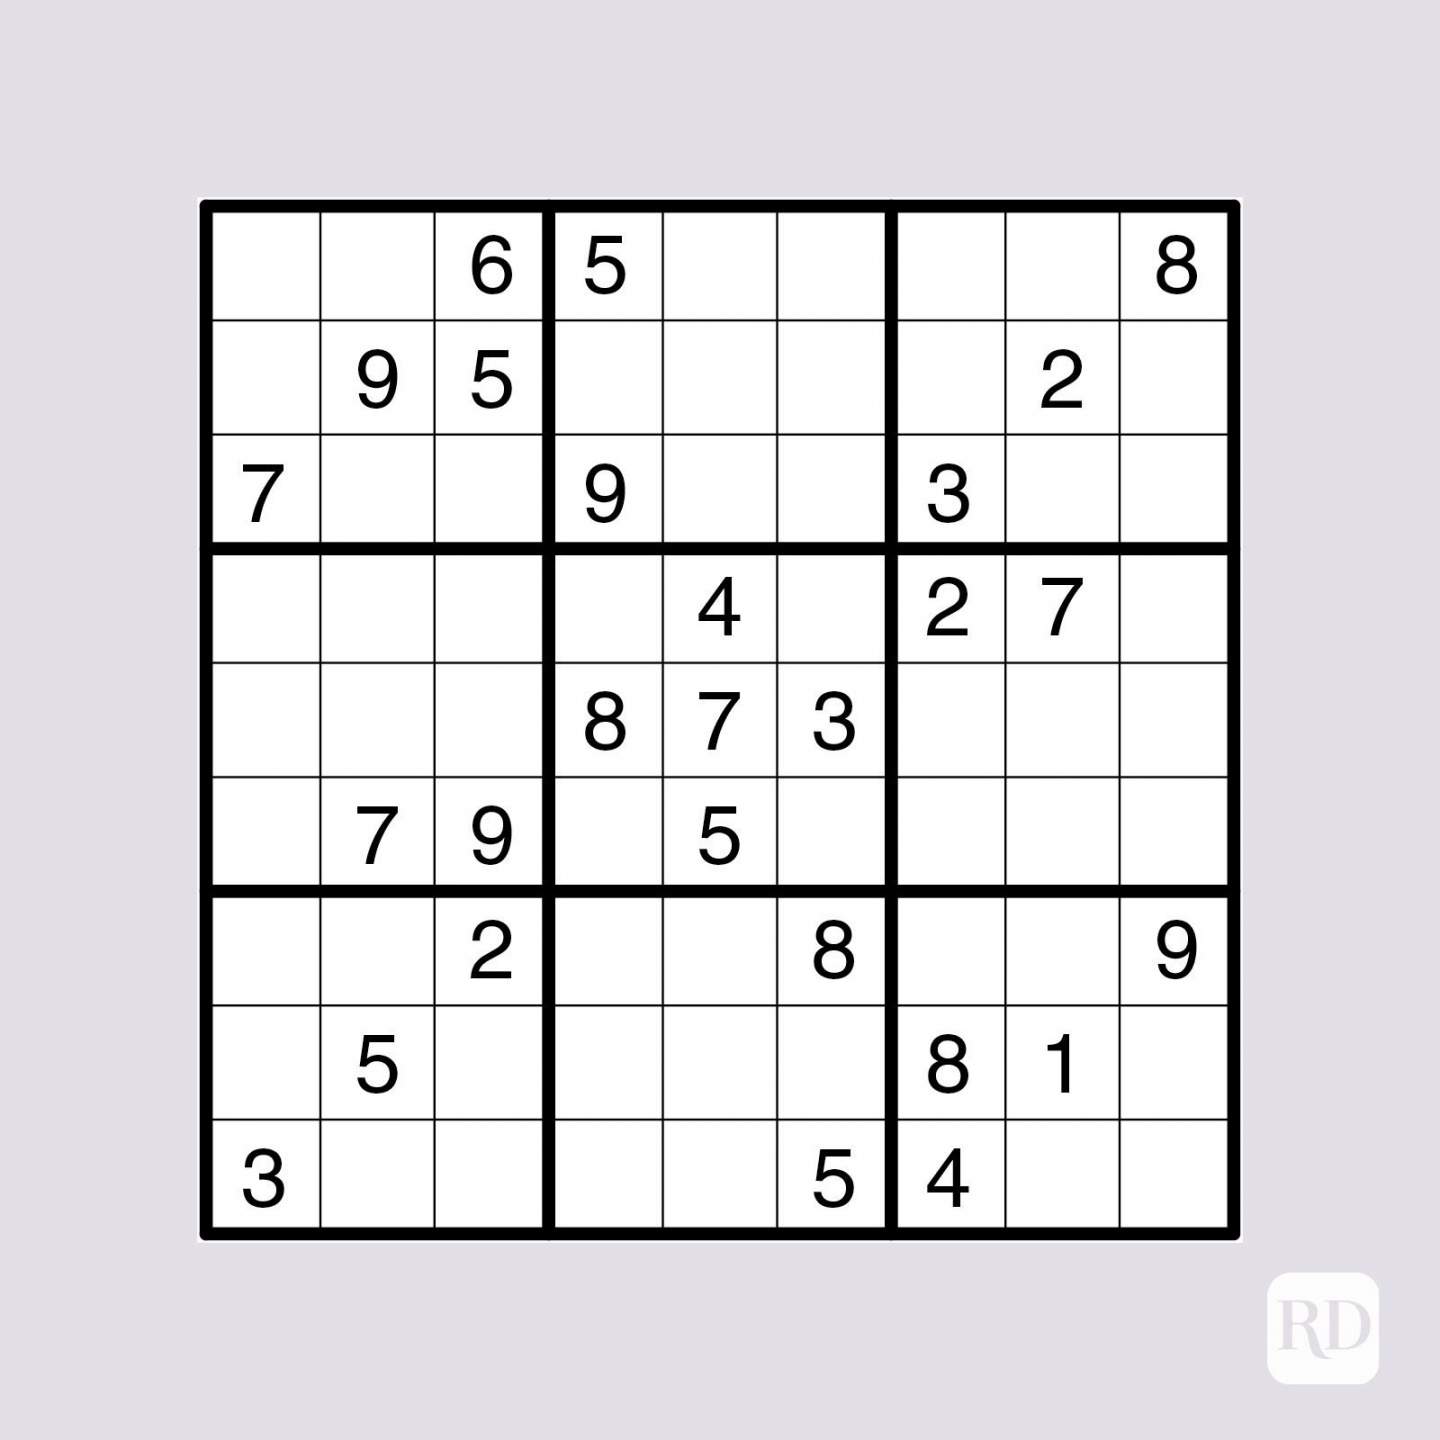 Free Sudoku Puzzles Printable - Printable -  Free Printable Sudoku Puzzles for All Levels  Reader